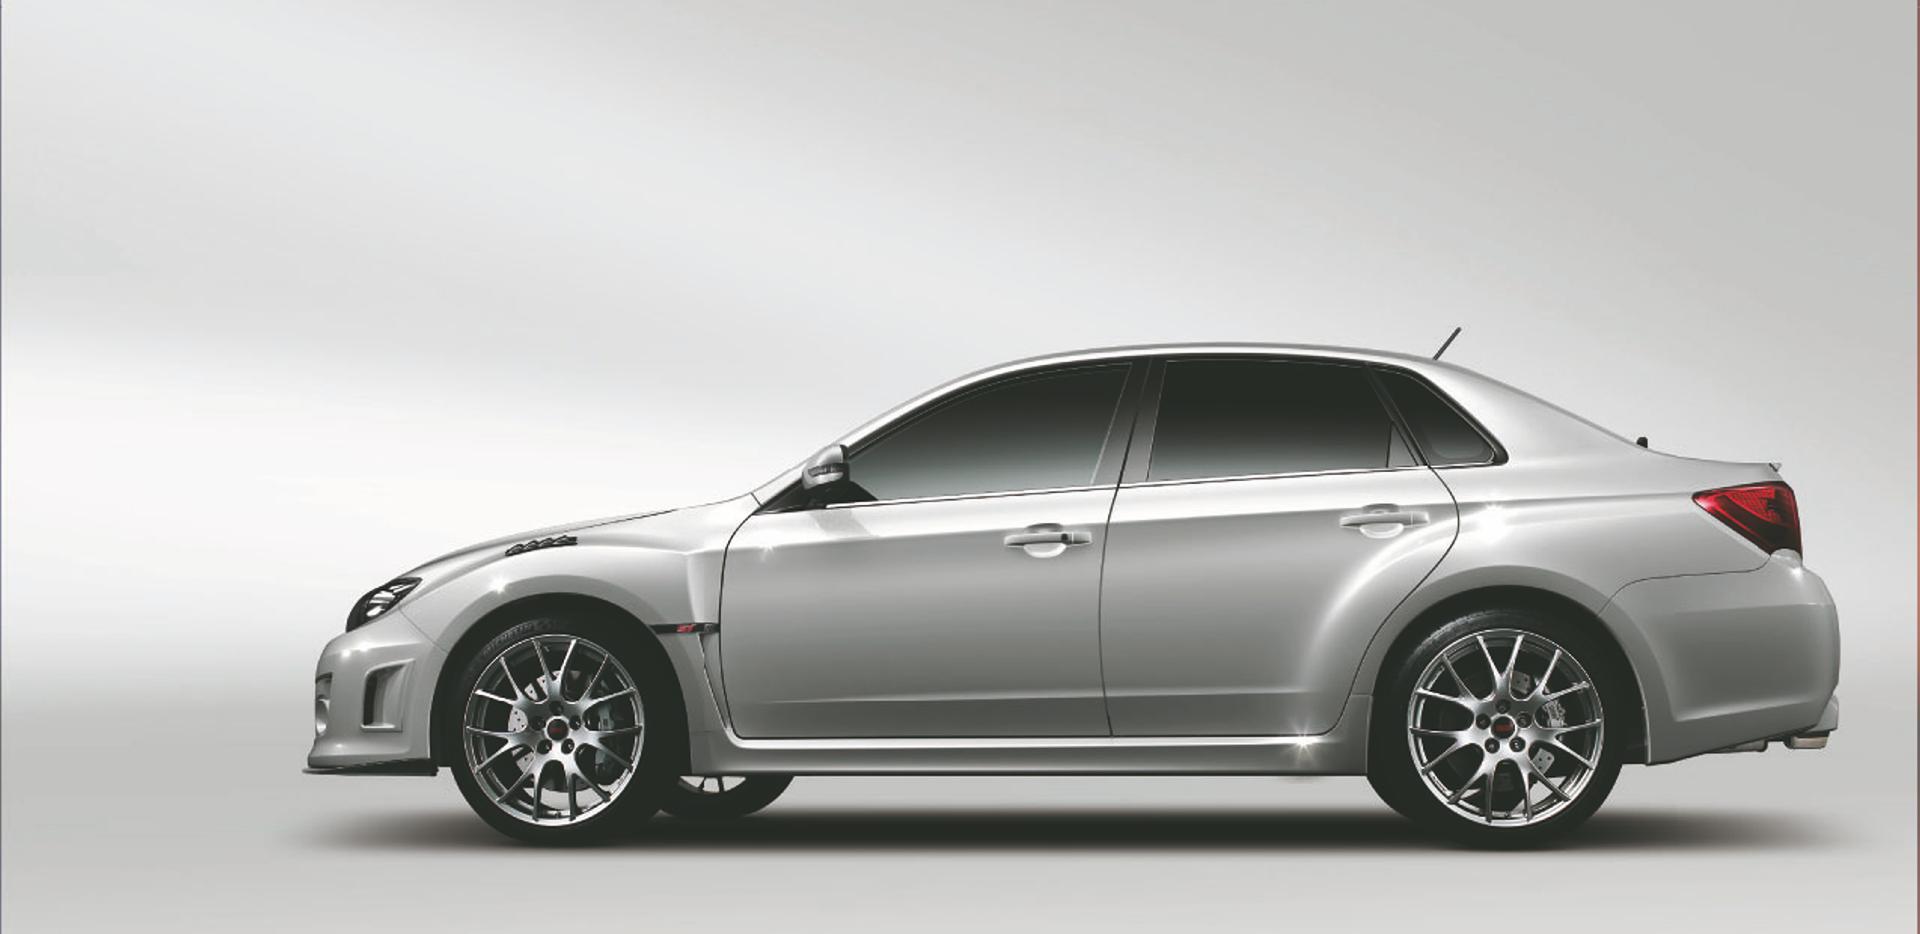 12 Subaru Impreza Wrx Sti S6 Nbr Challenge Package News And Information